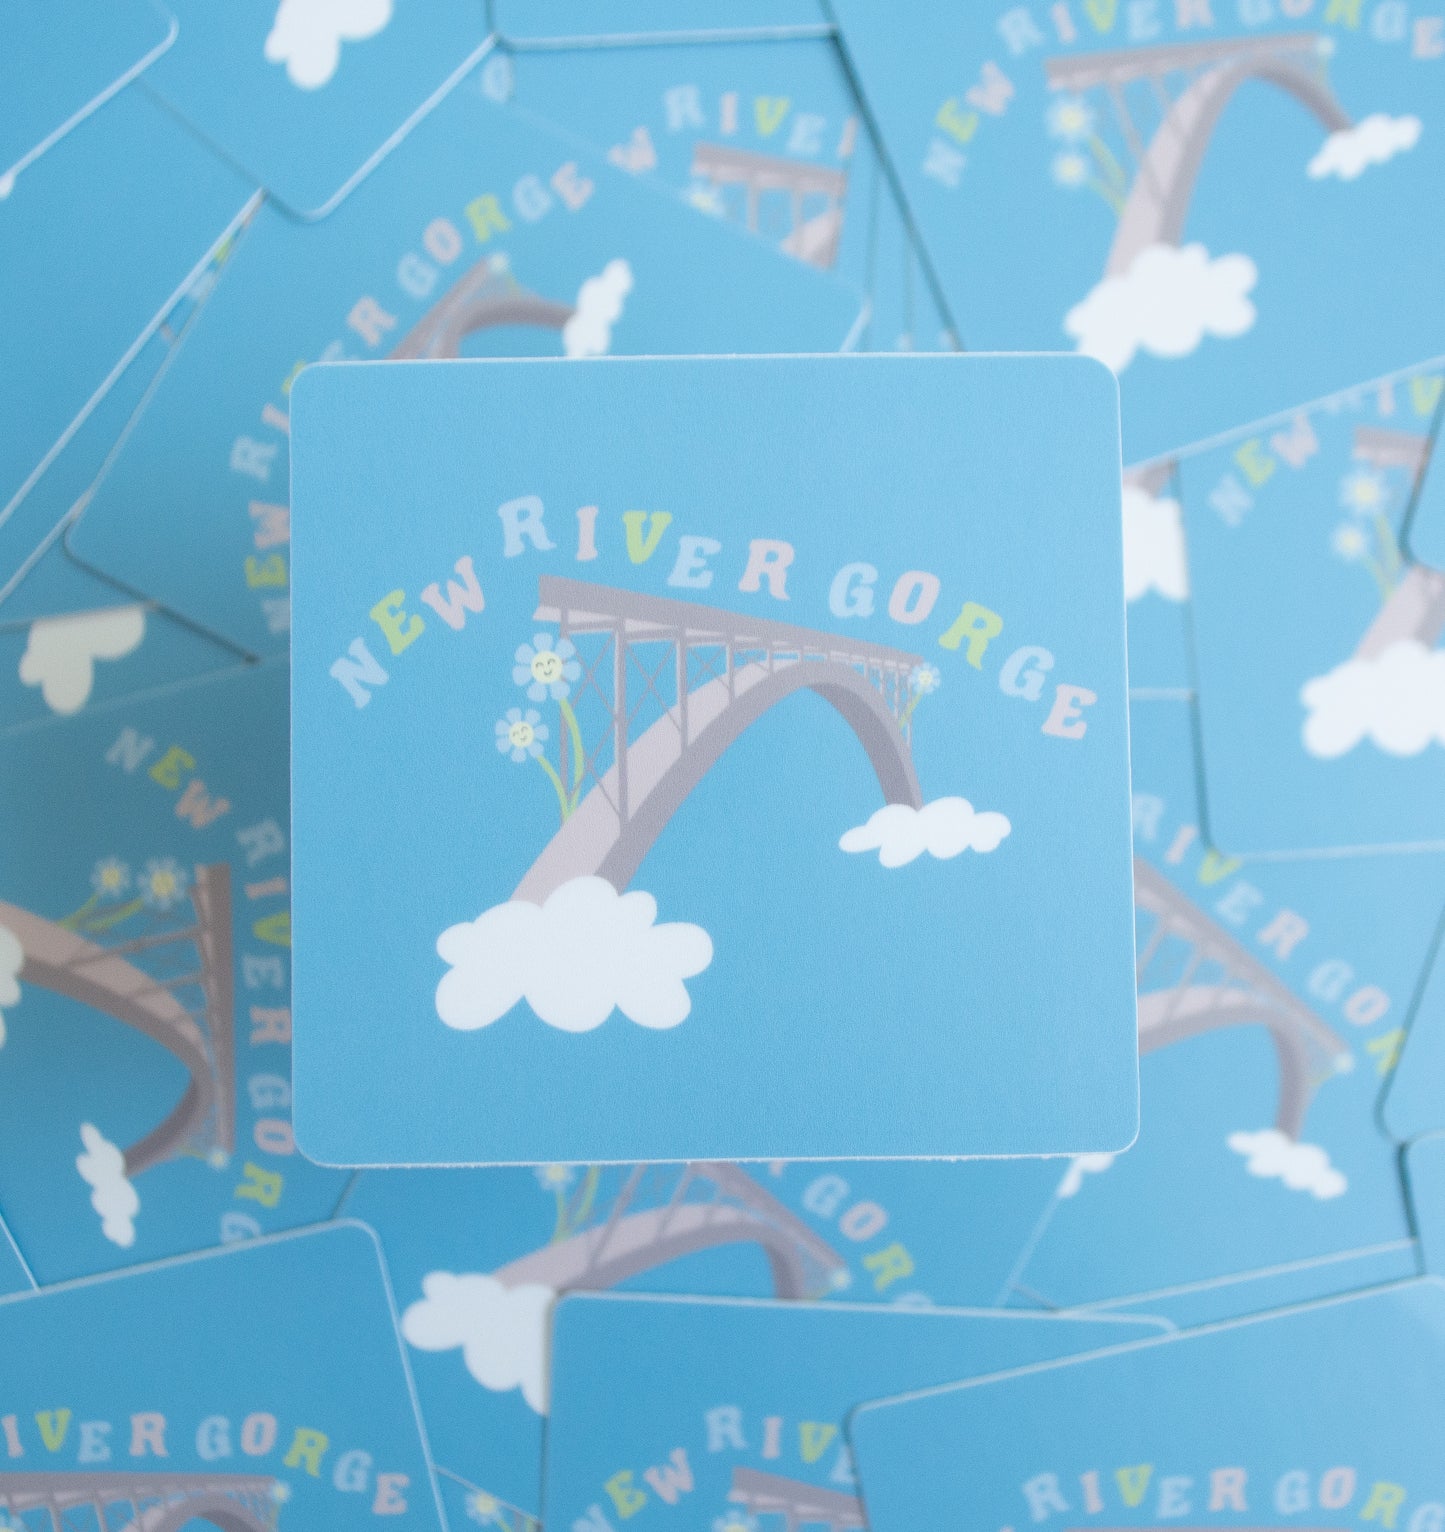 New River Gorge Vinyl Sticker